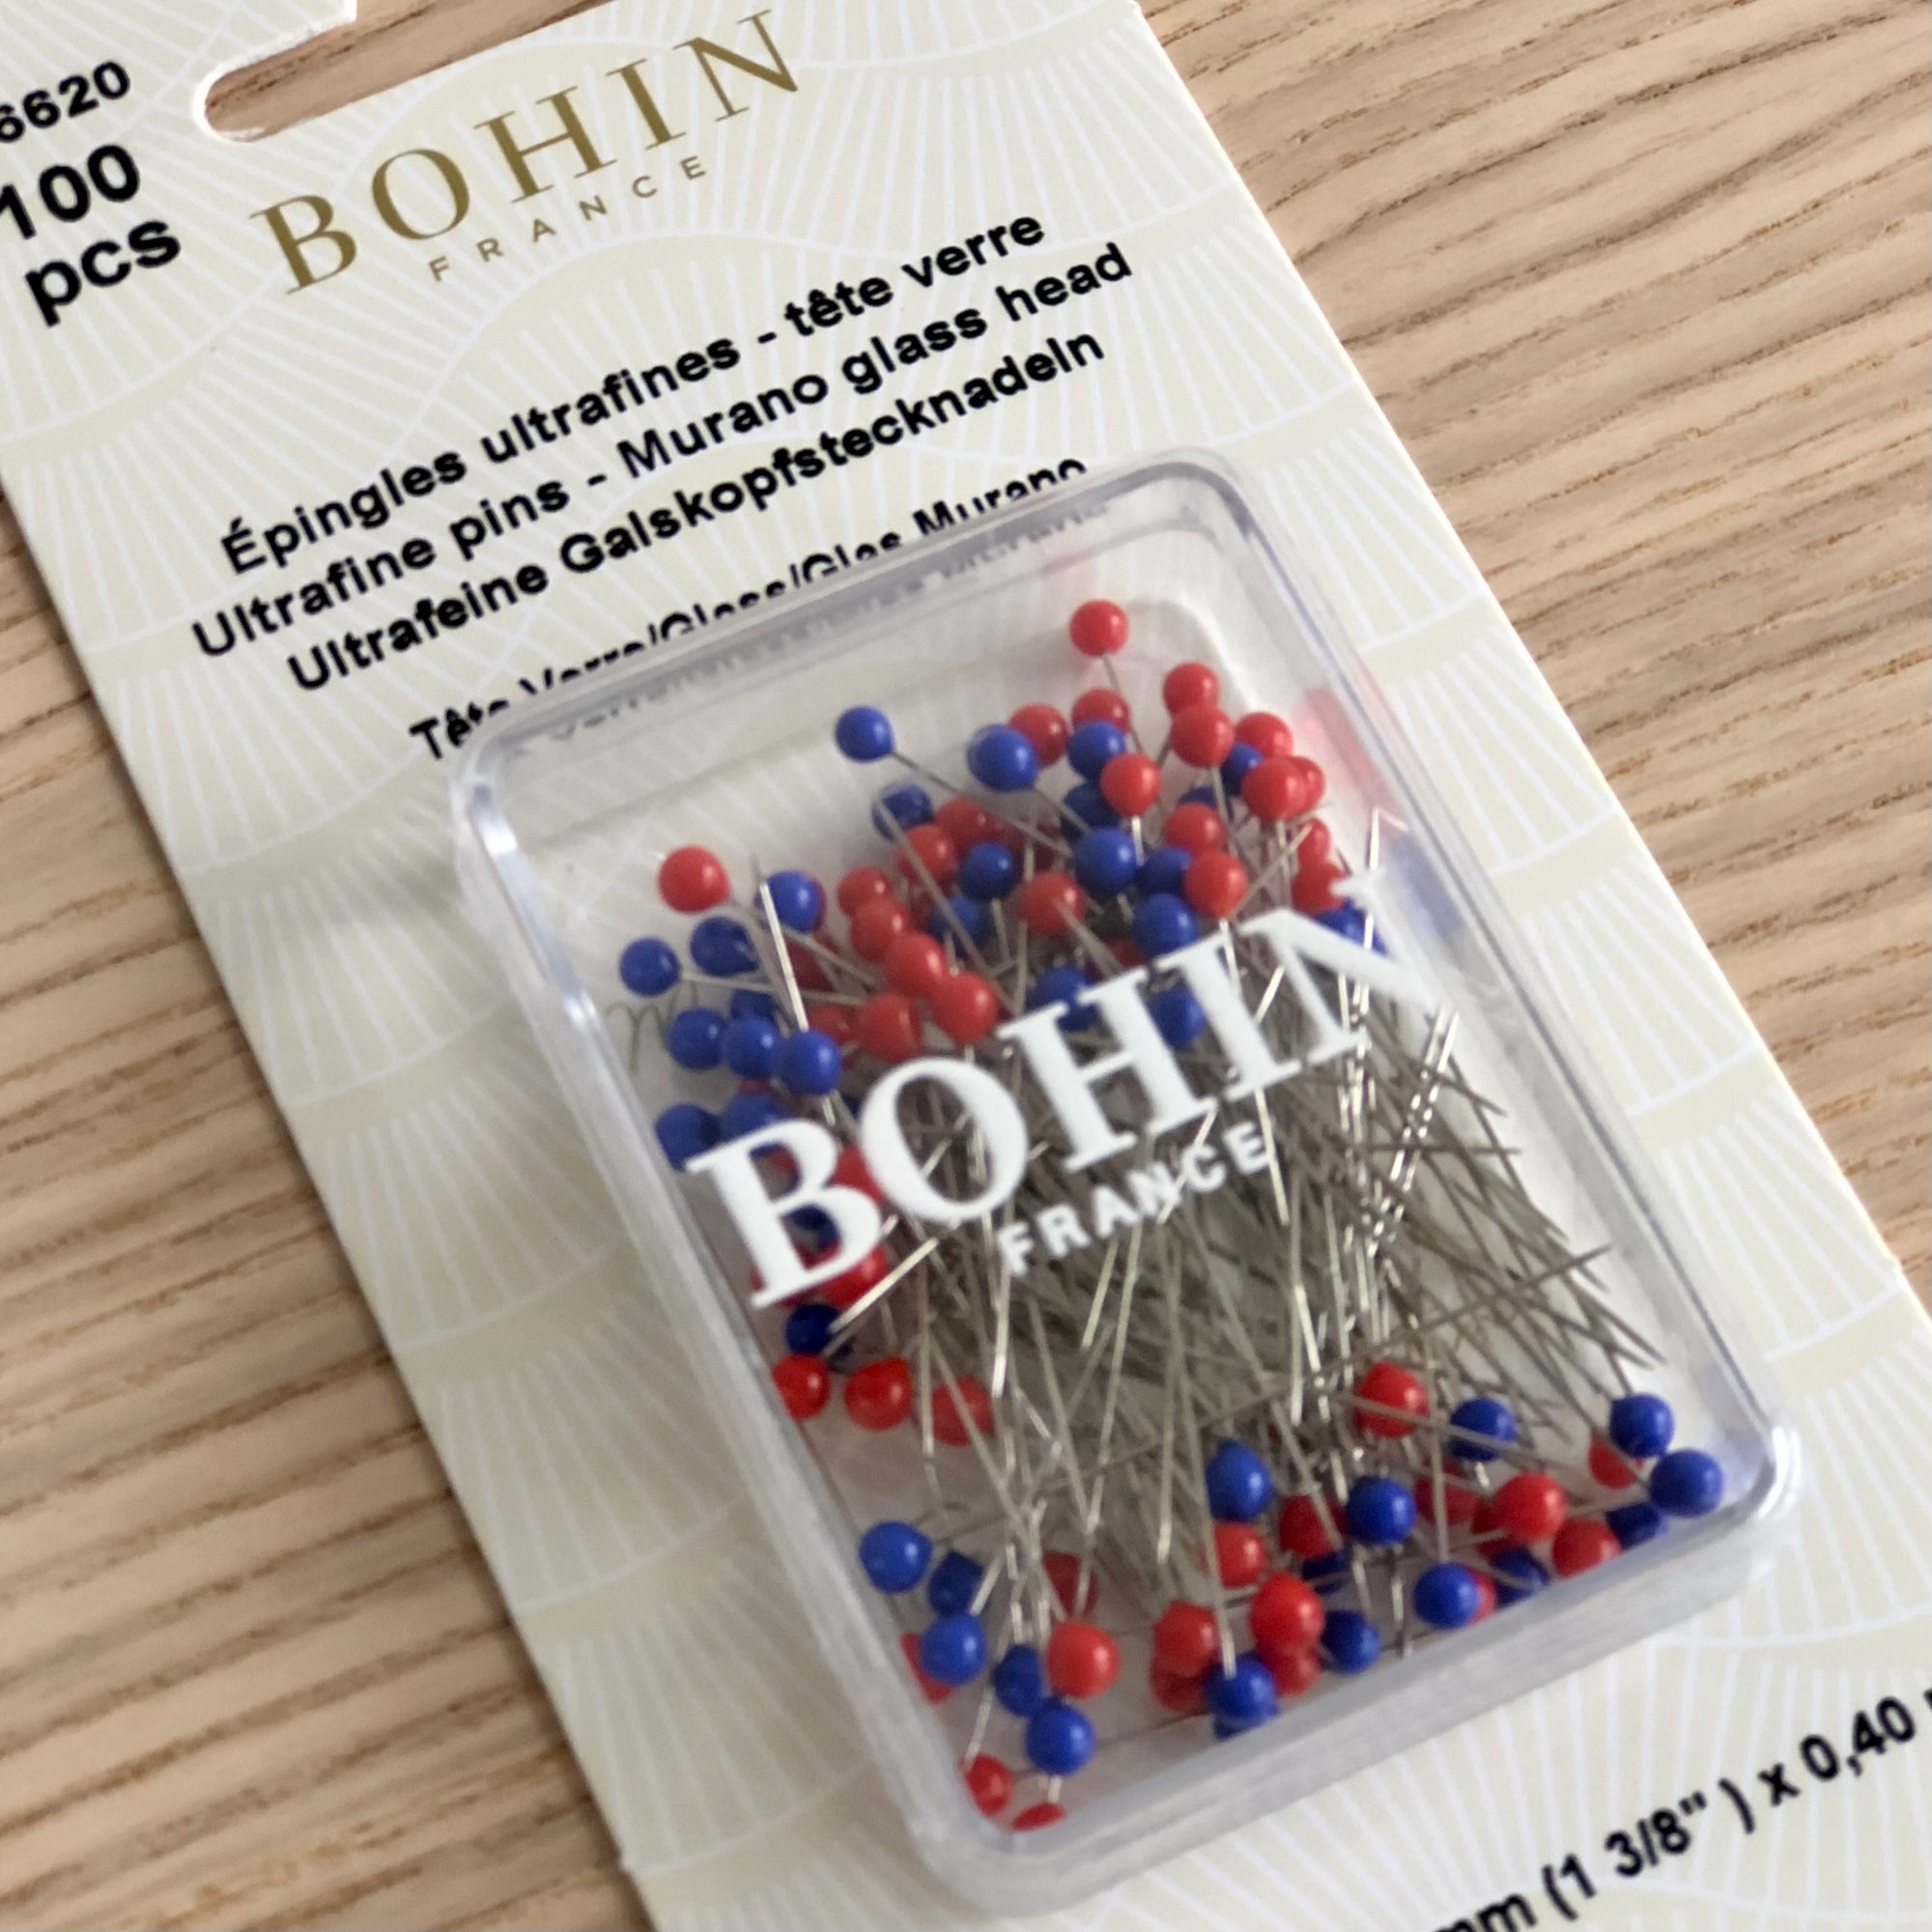 Bohin Ultra Fine Pins